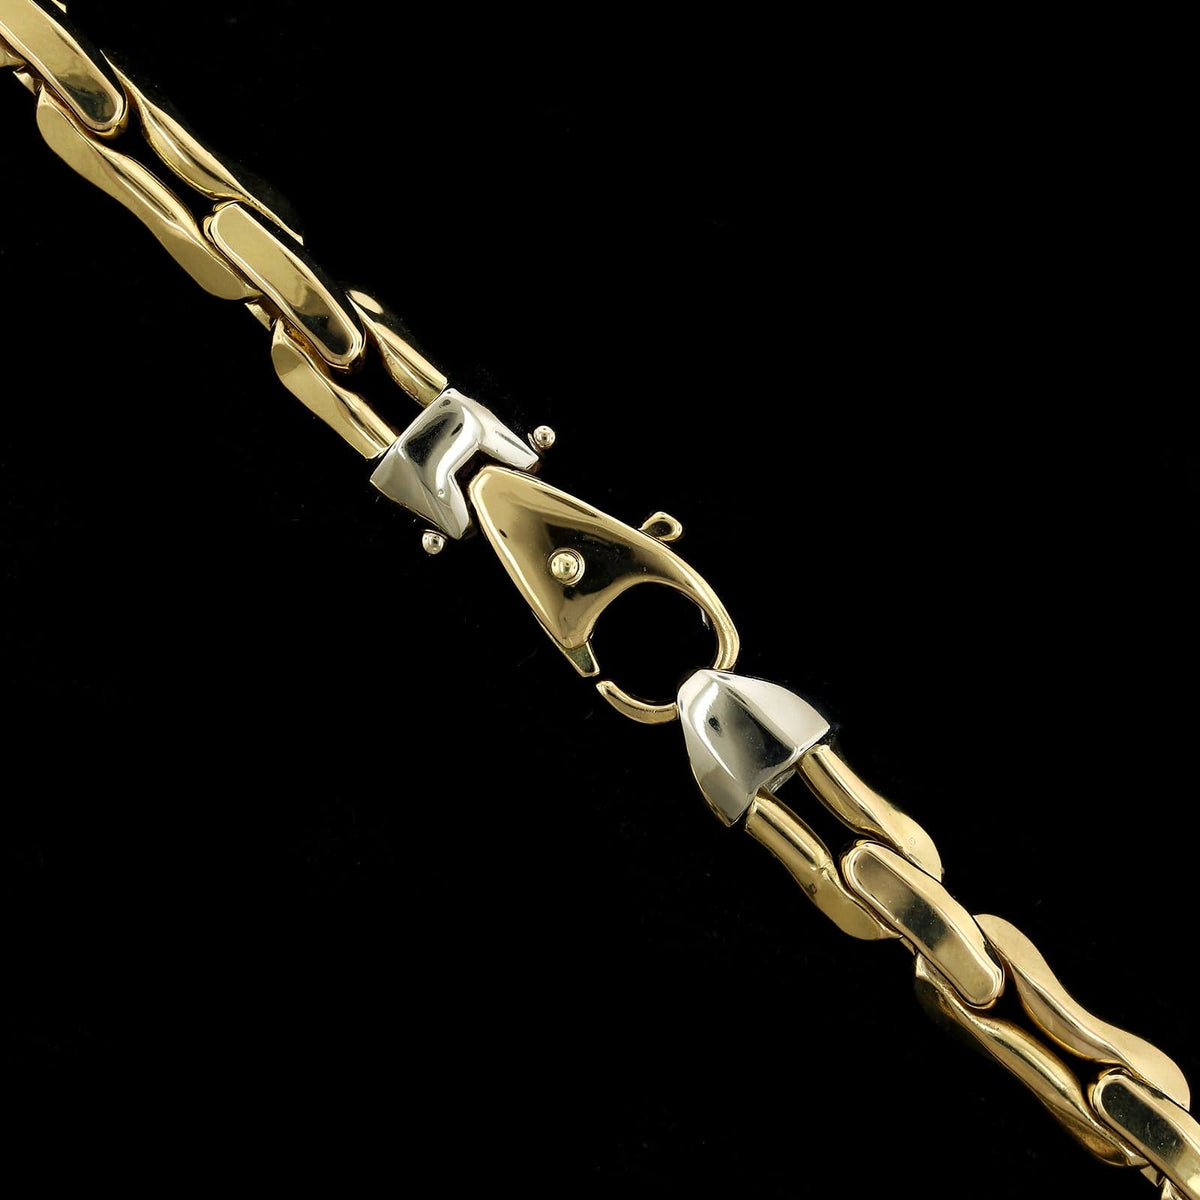 18K Two-tone Gold Estate Fancy Link Necklace